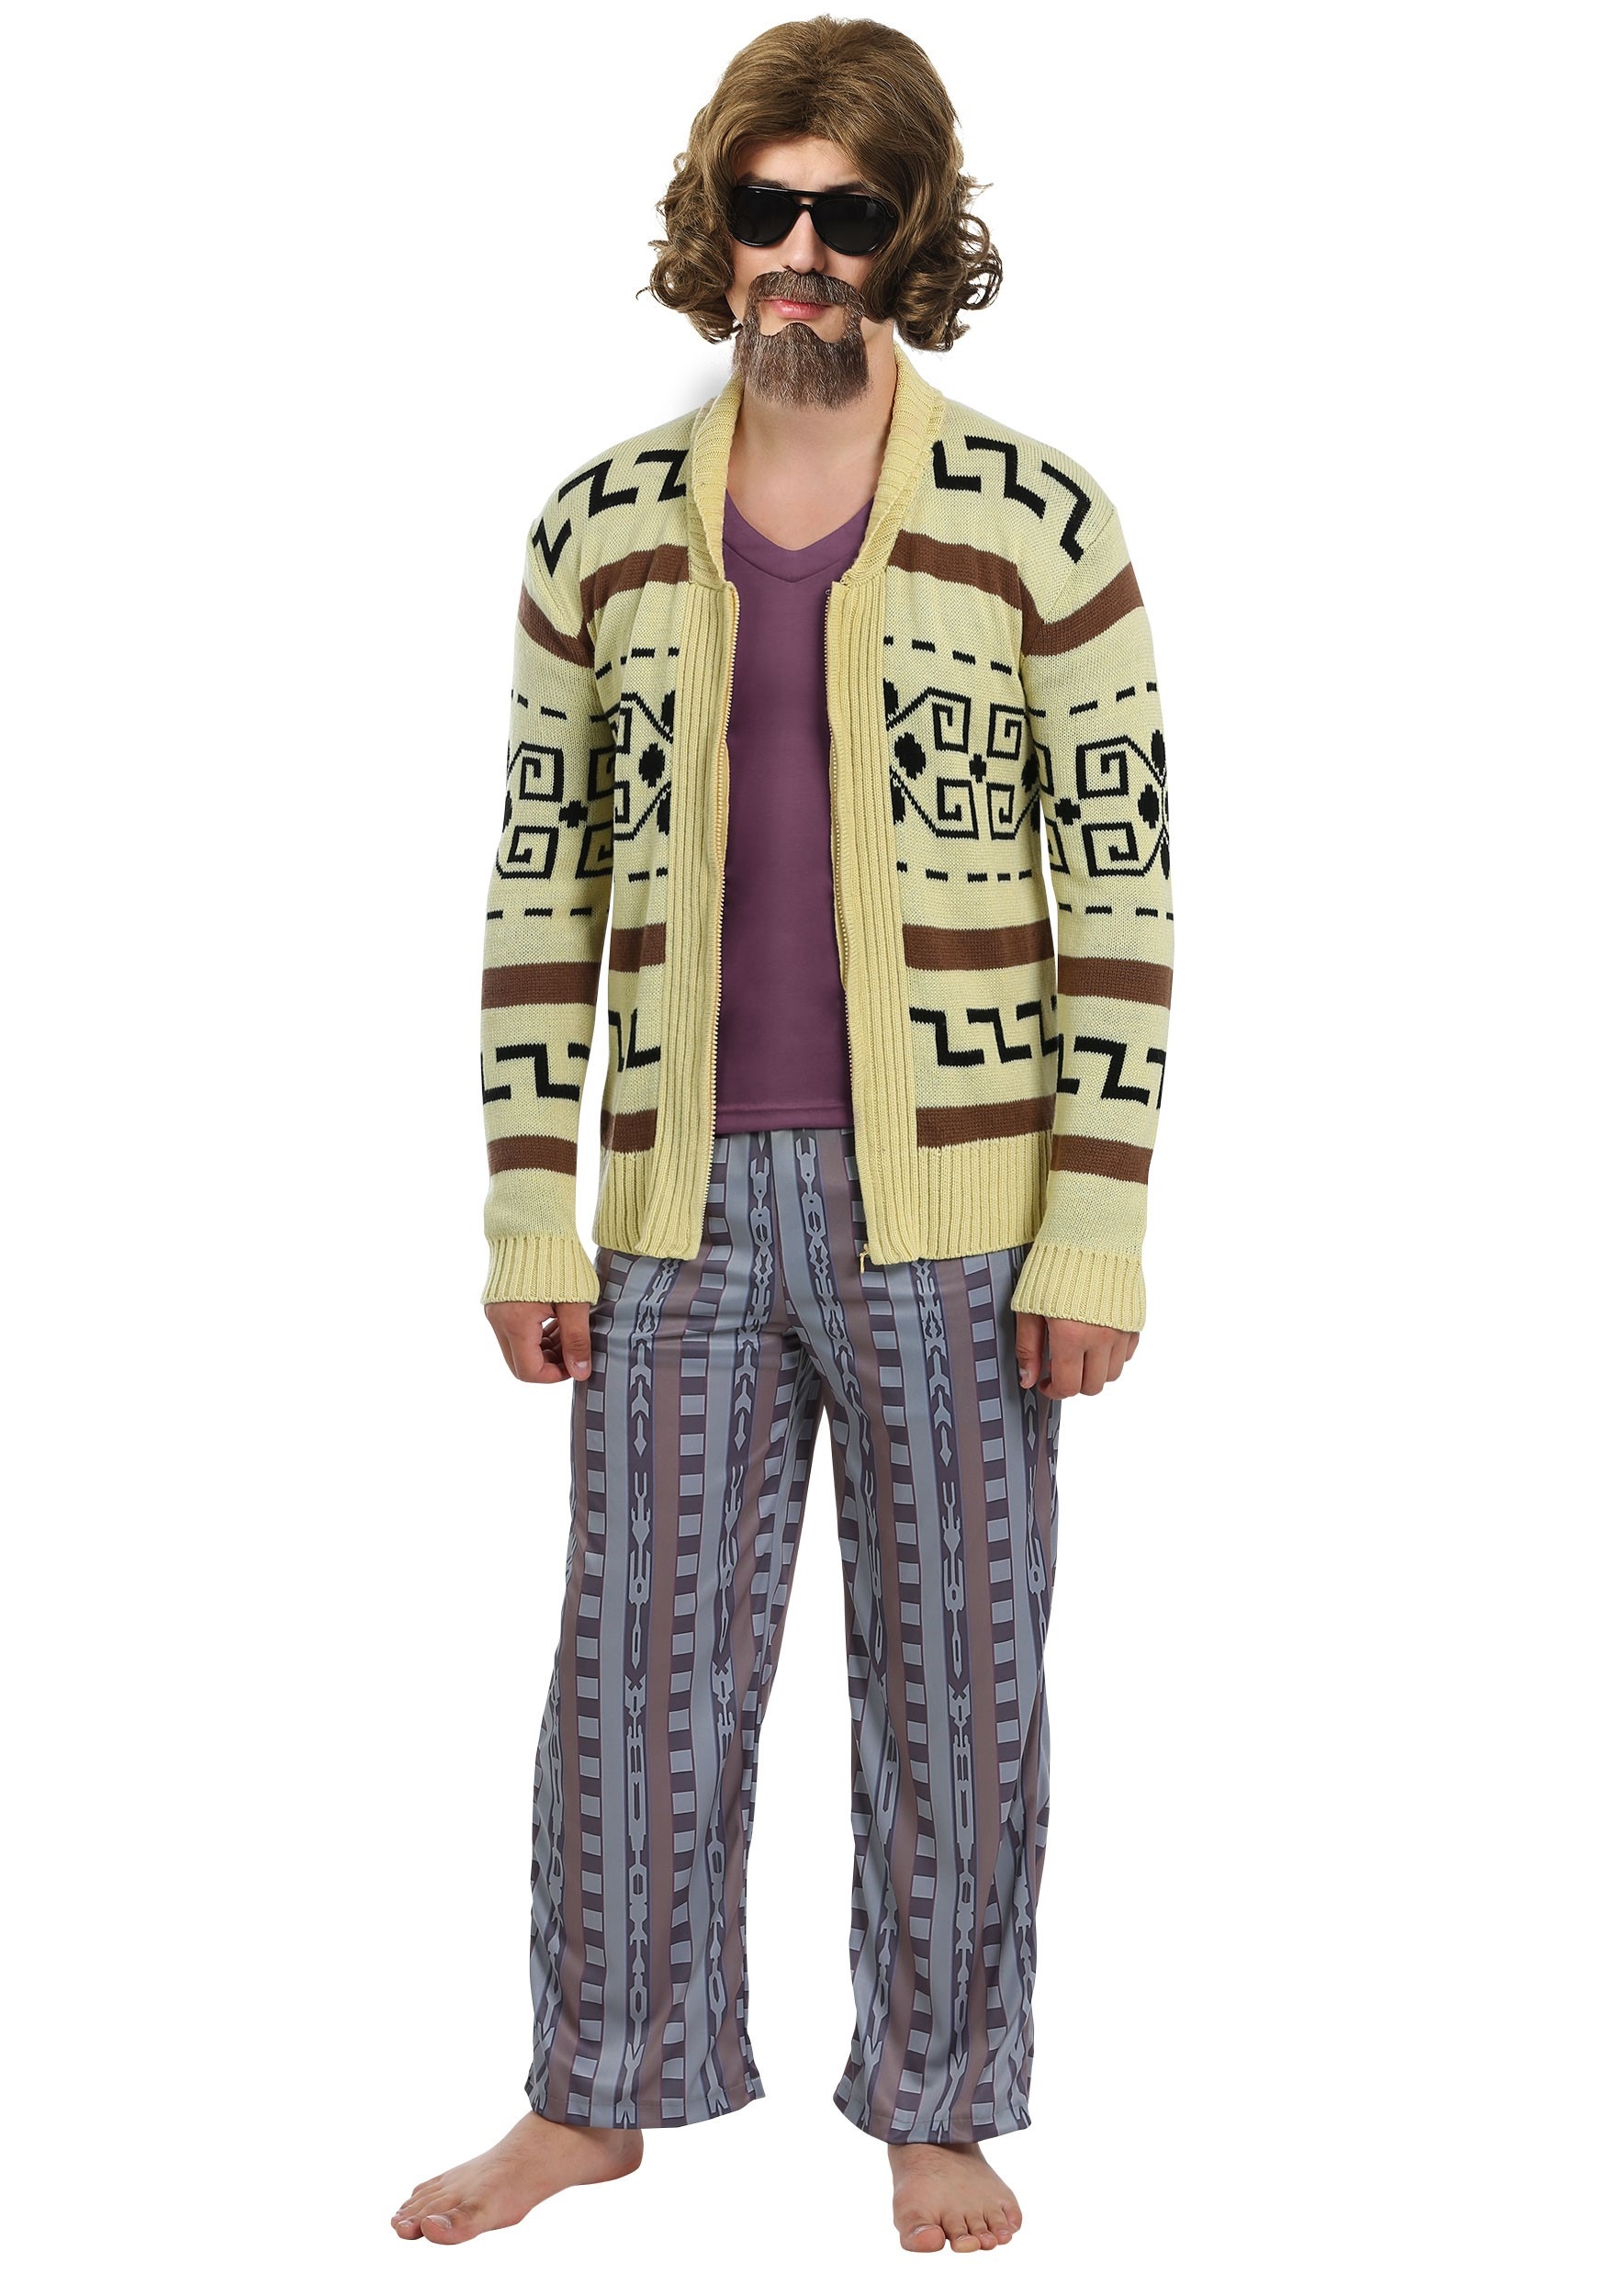 Image of The Big Lebowski The Dude Men's Plus Size Sweater Costume 2X ID FUN6331PL-3X